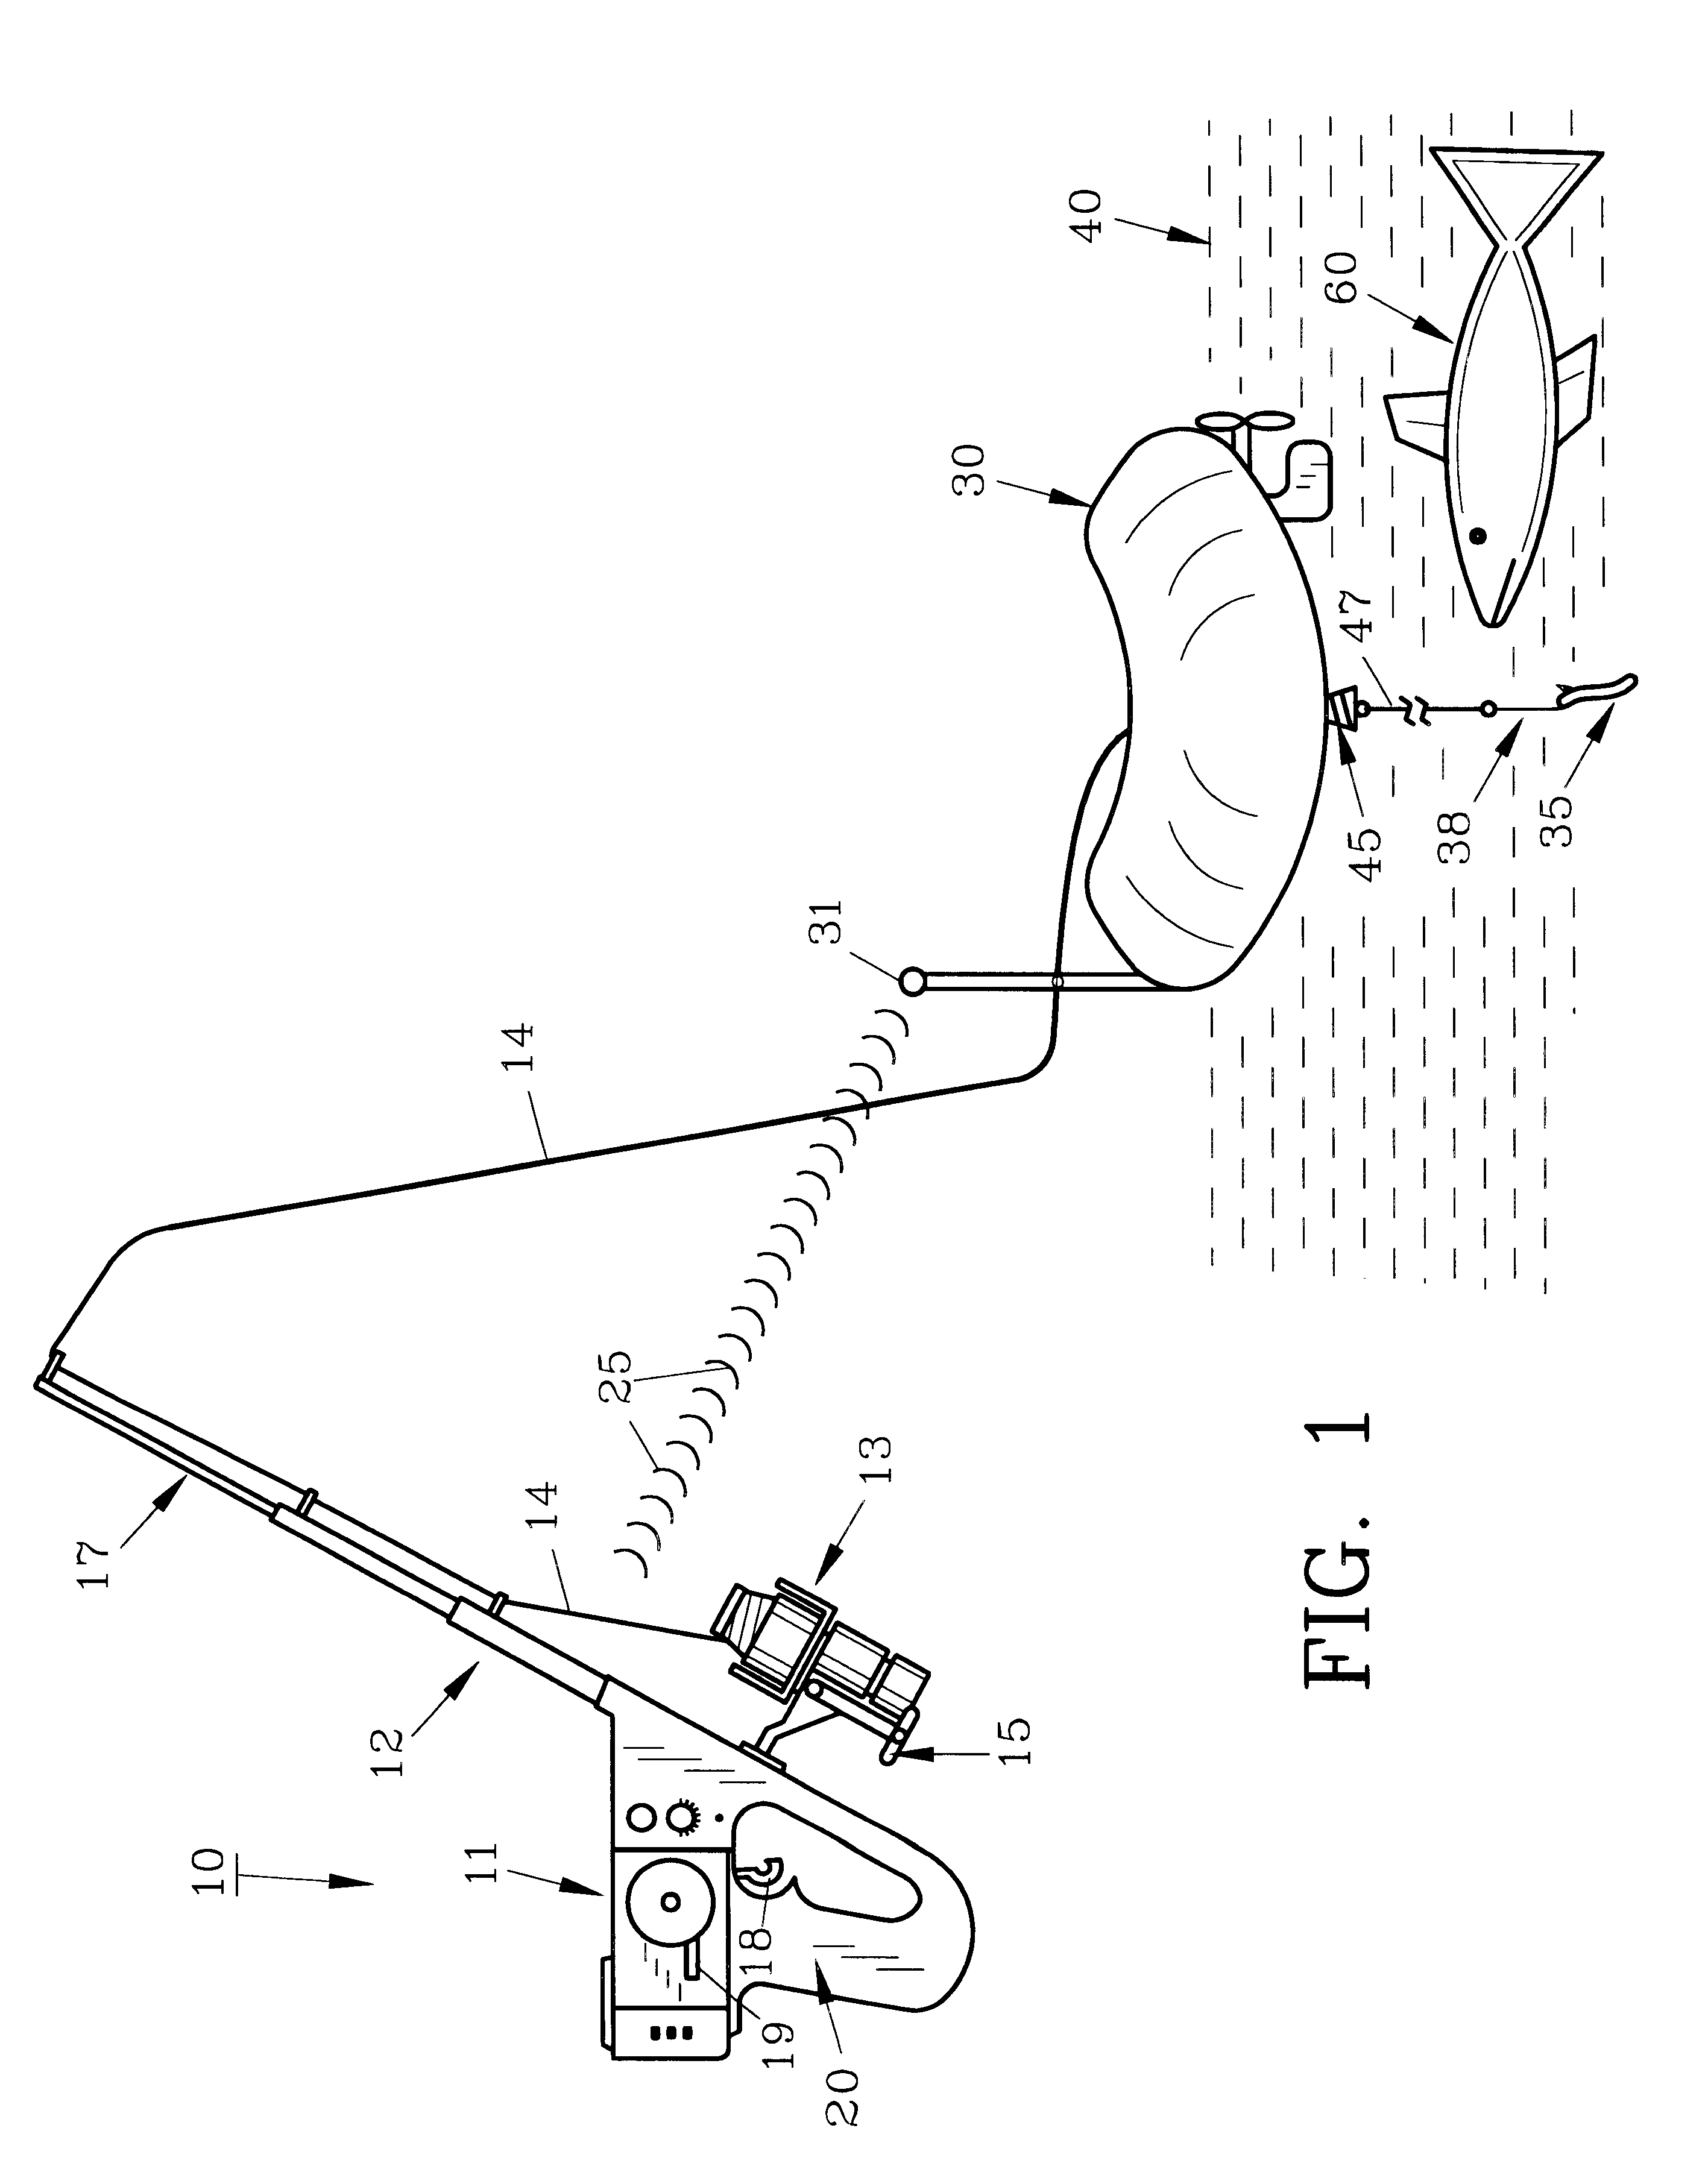 Radio-controlled fishing apparatus and method